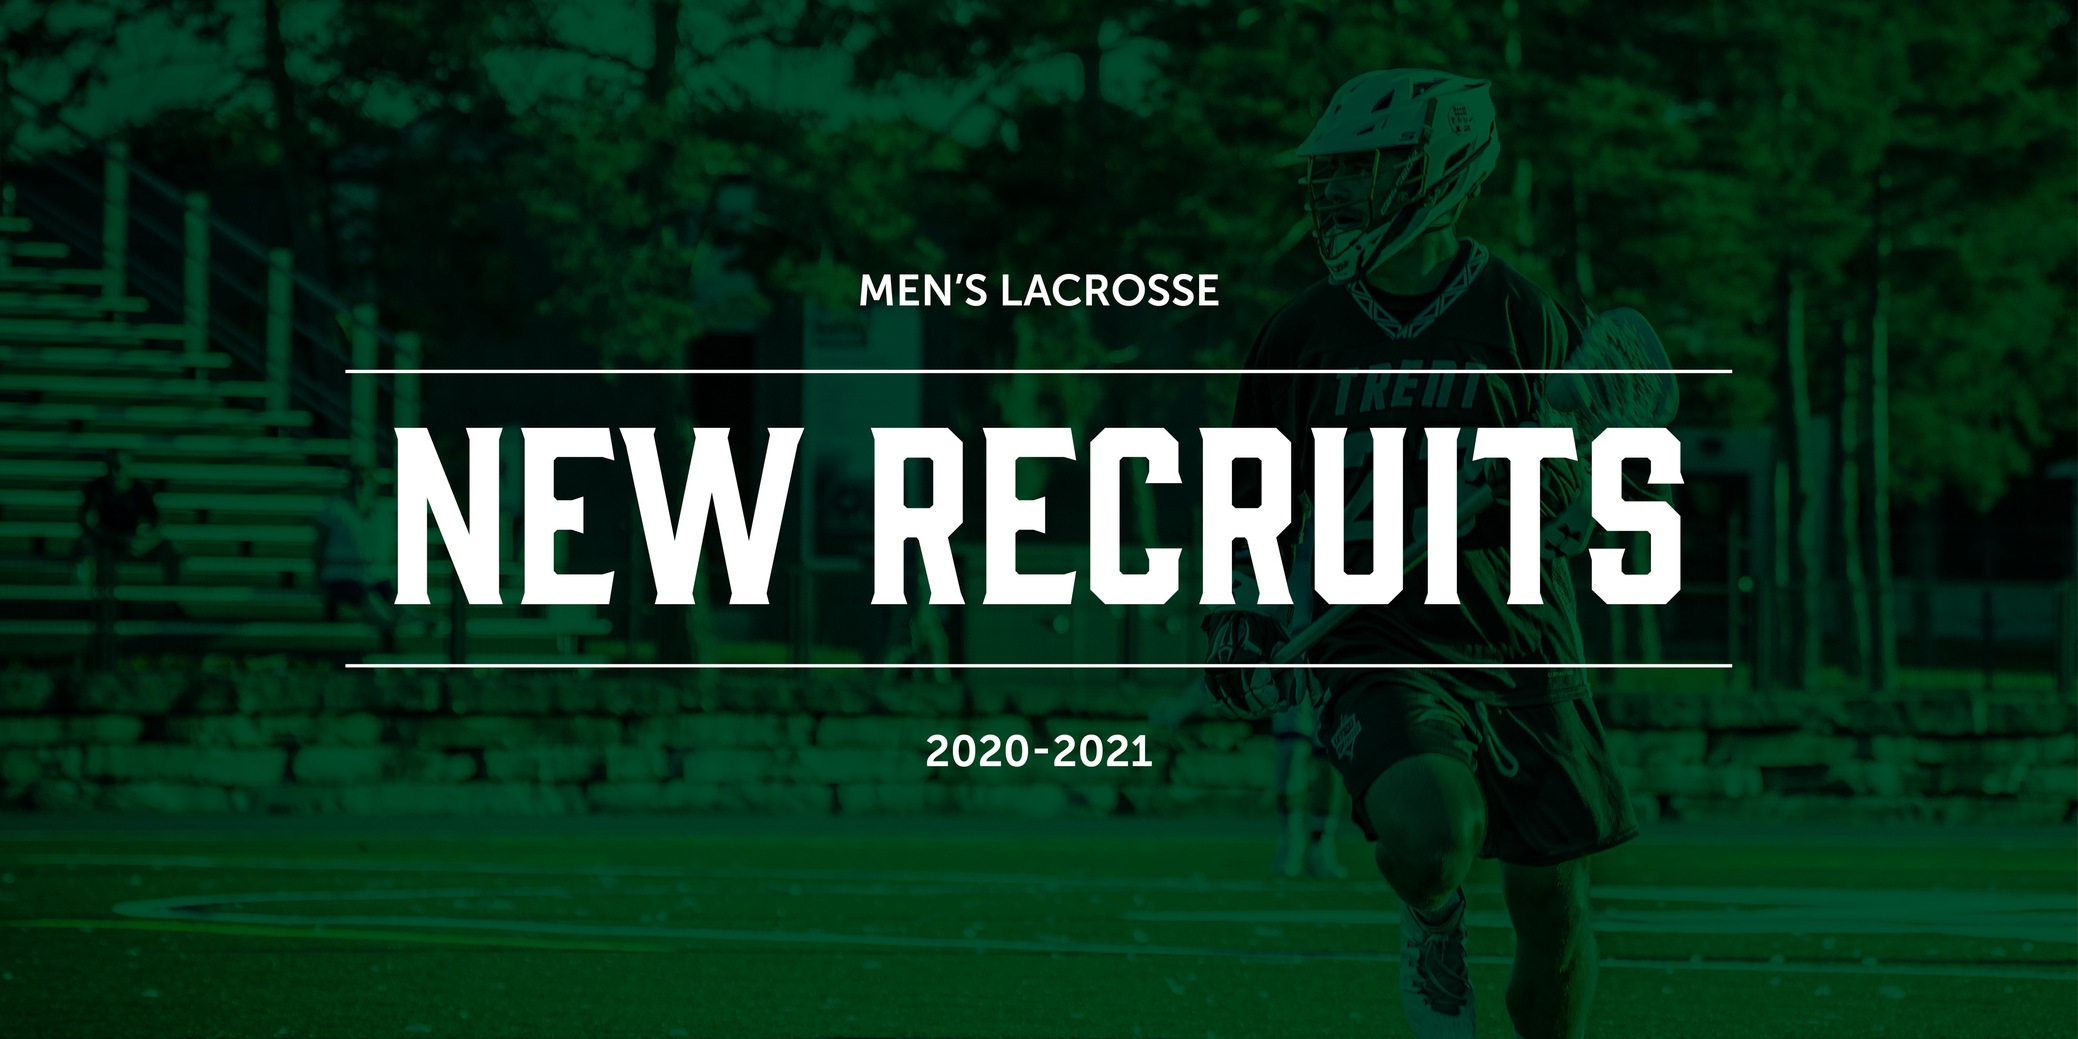 Men's Lacrosse New Recruits 2020-2021